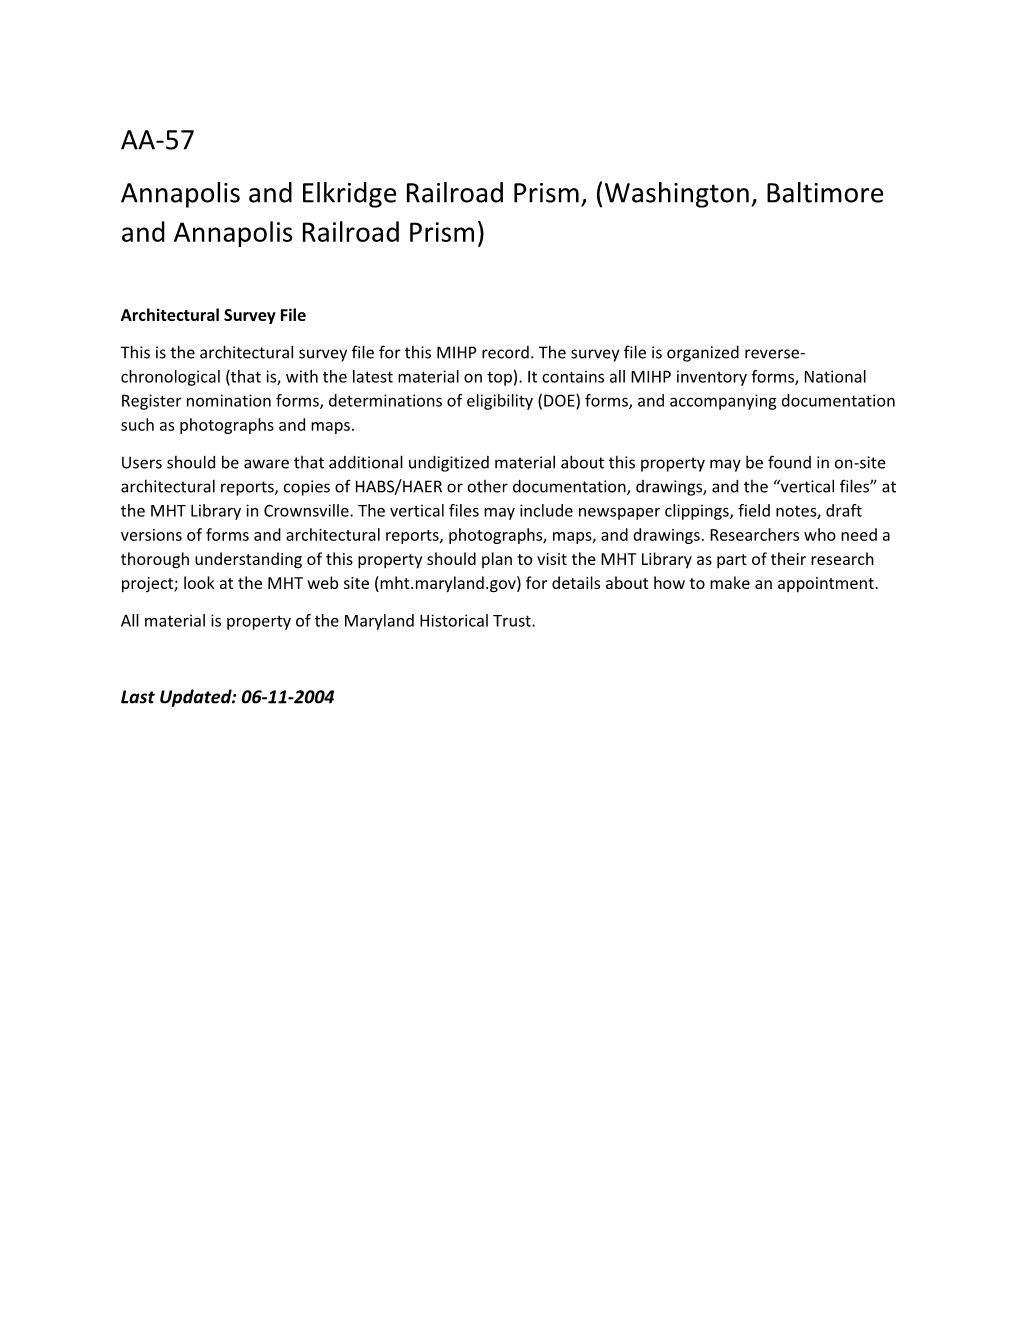 Washington, Baltimore and Annapolis Railroad Prism)